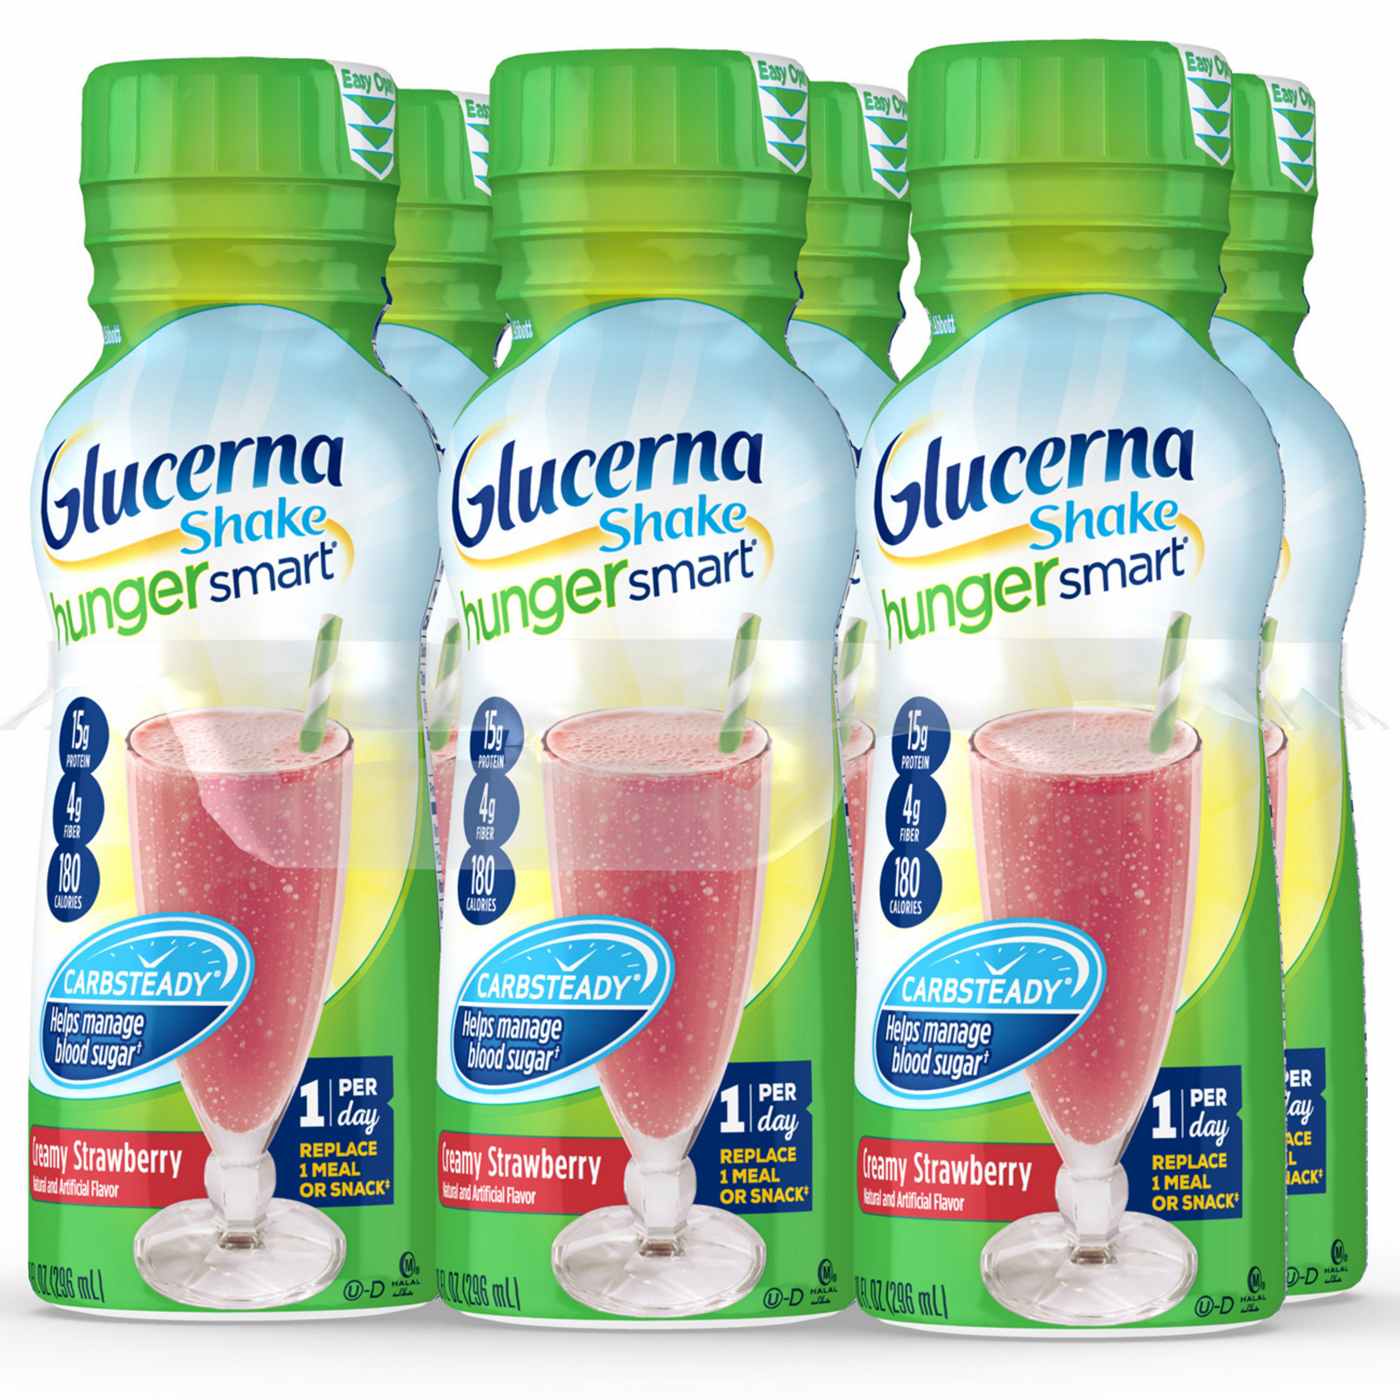 Glucerna Hunger Smart Shake, 15g Protein, Classic Strawberry, 10 fl oz Bottles; image 6 of 10